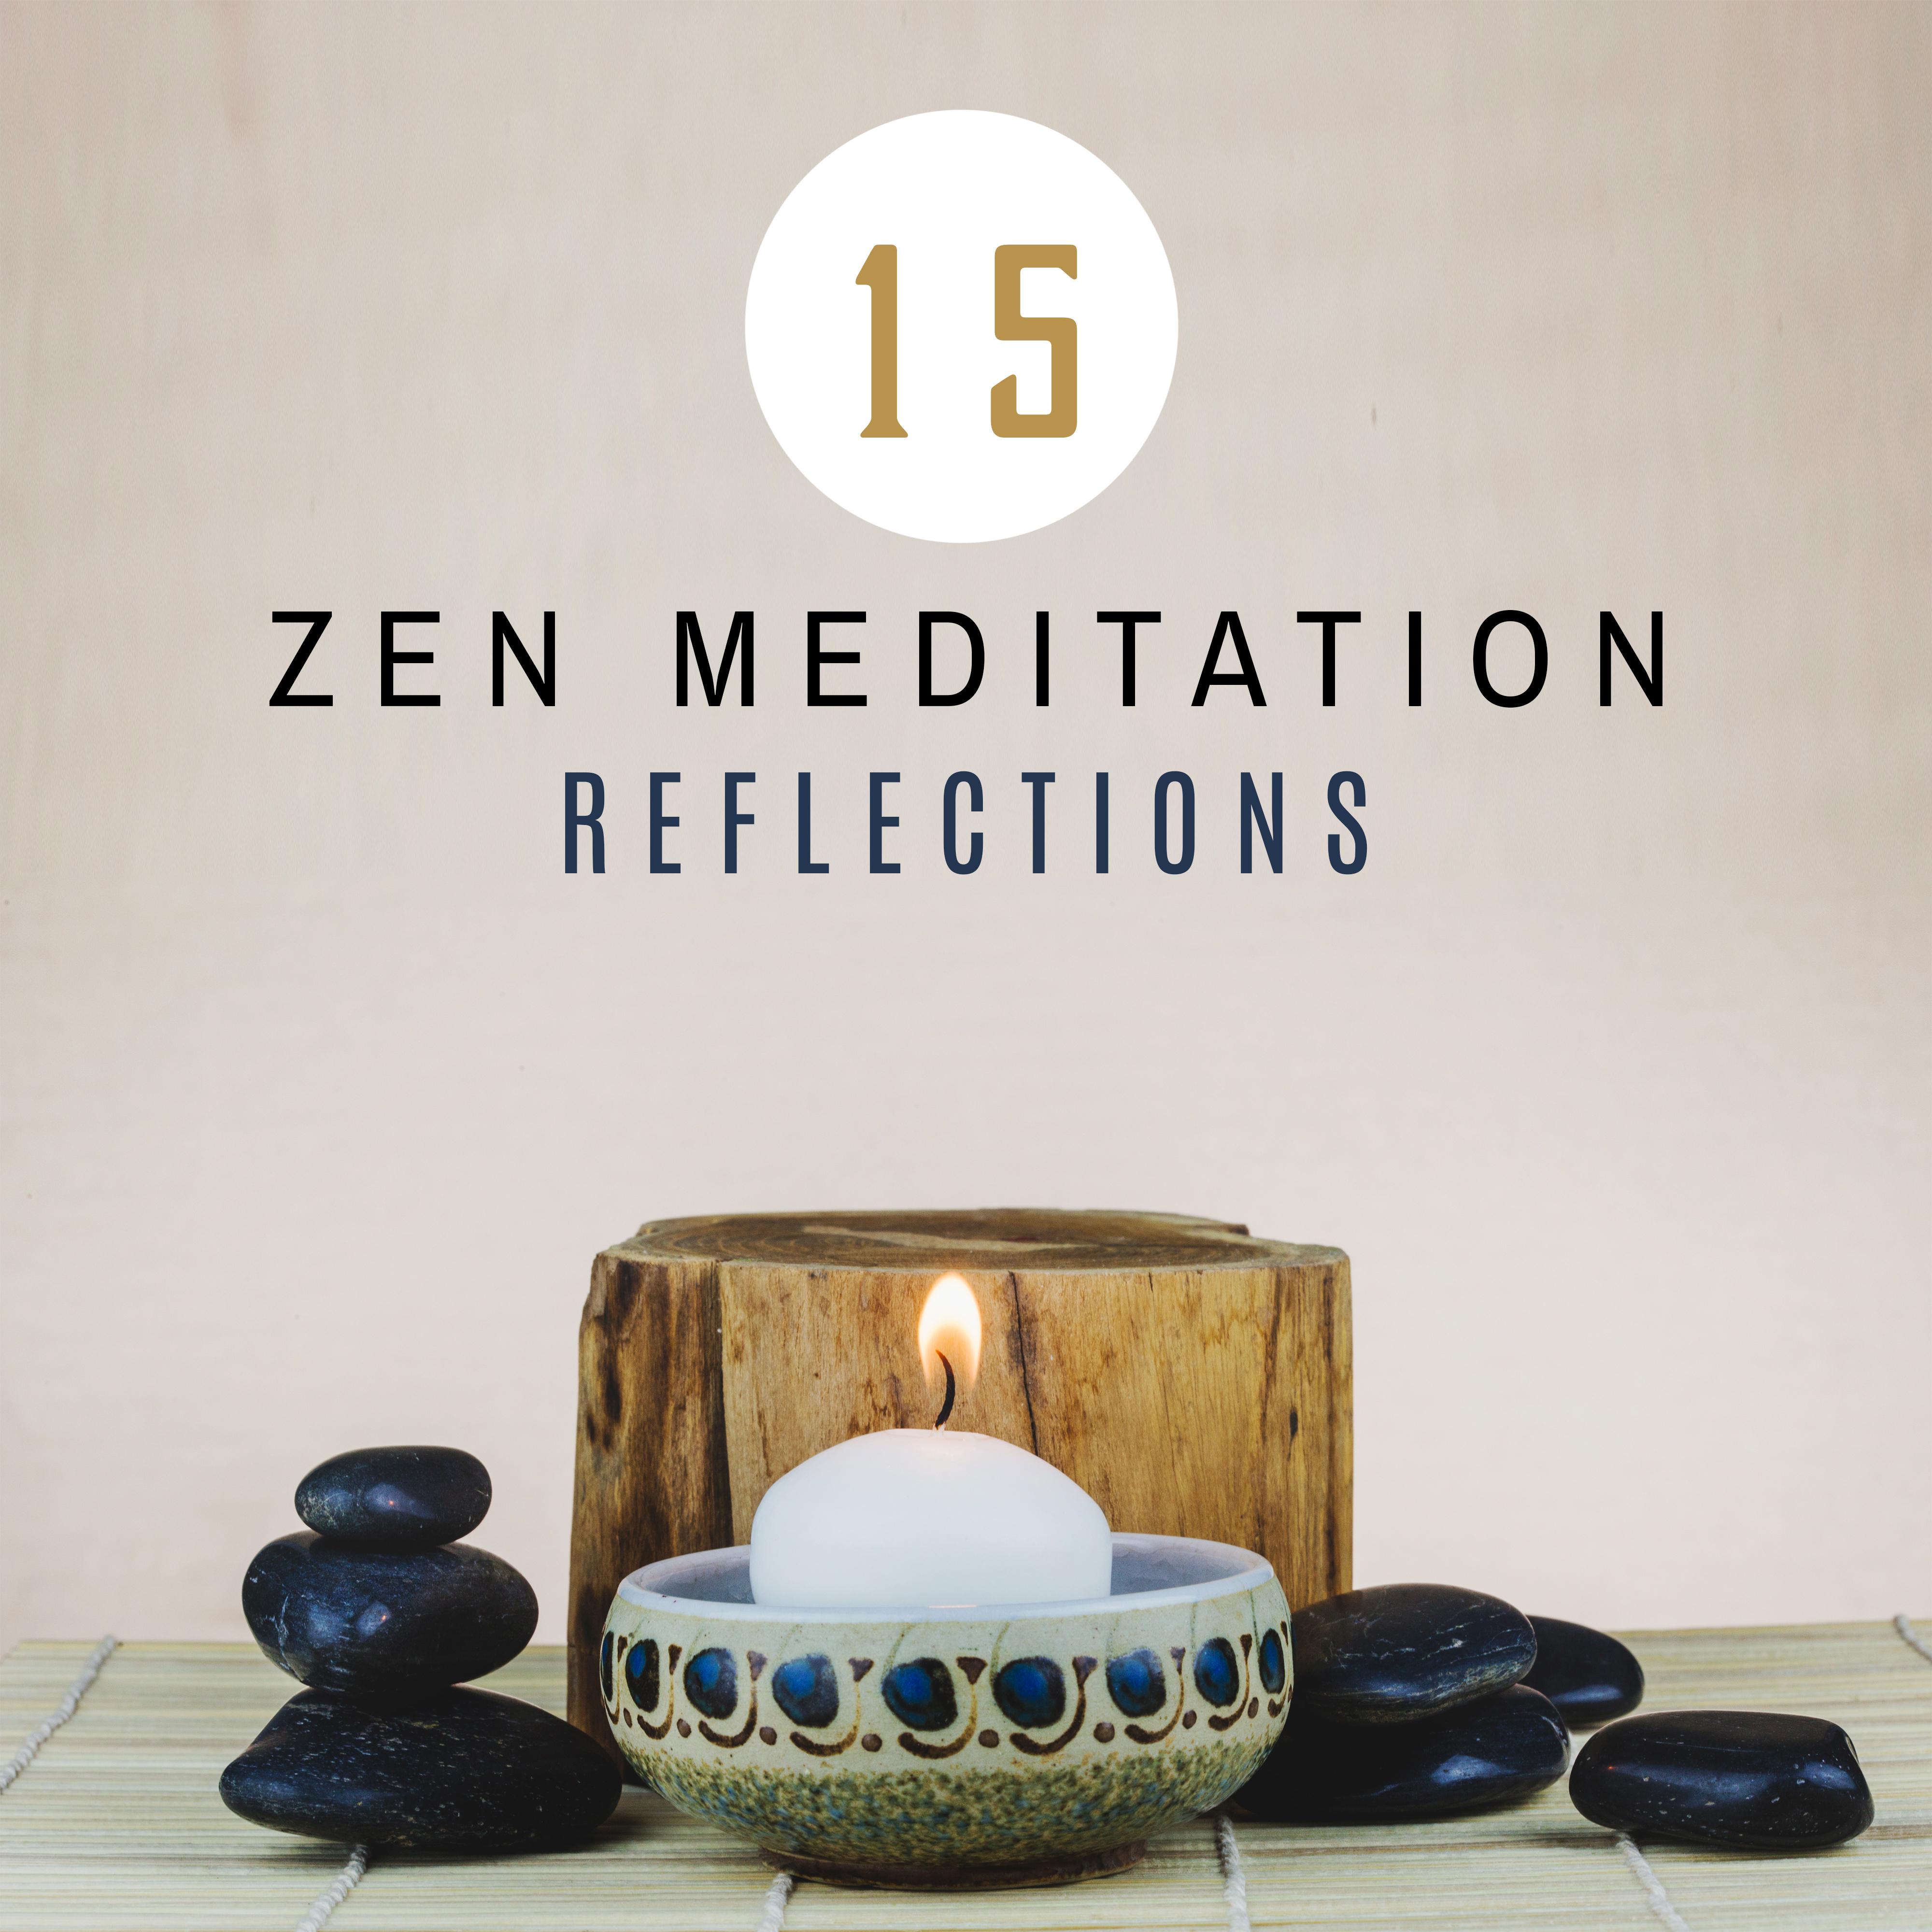 15 Zen Meditation Reflections